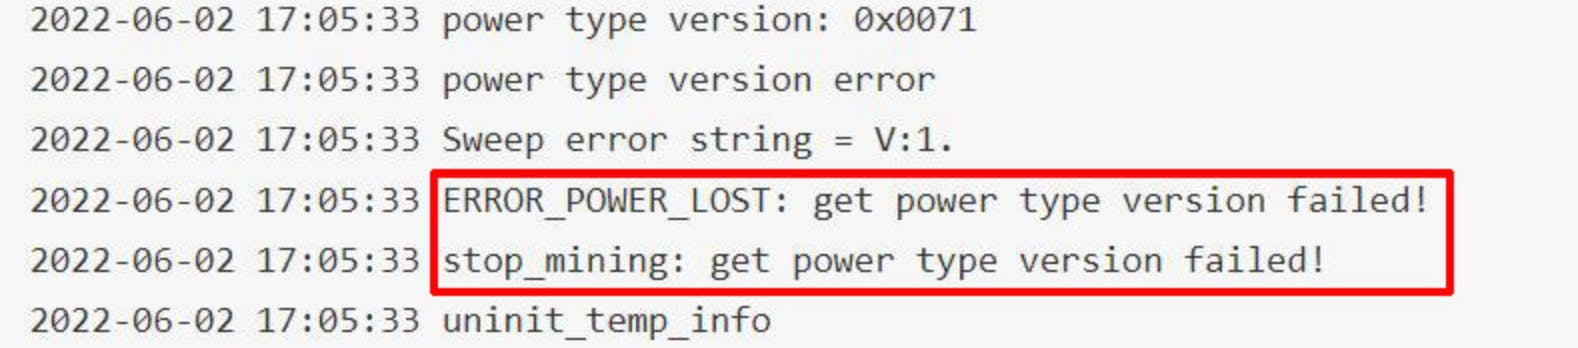 Error Power Lost